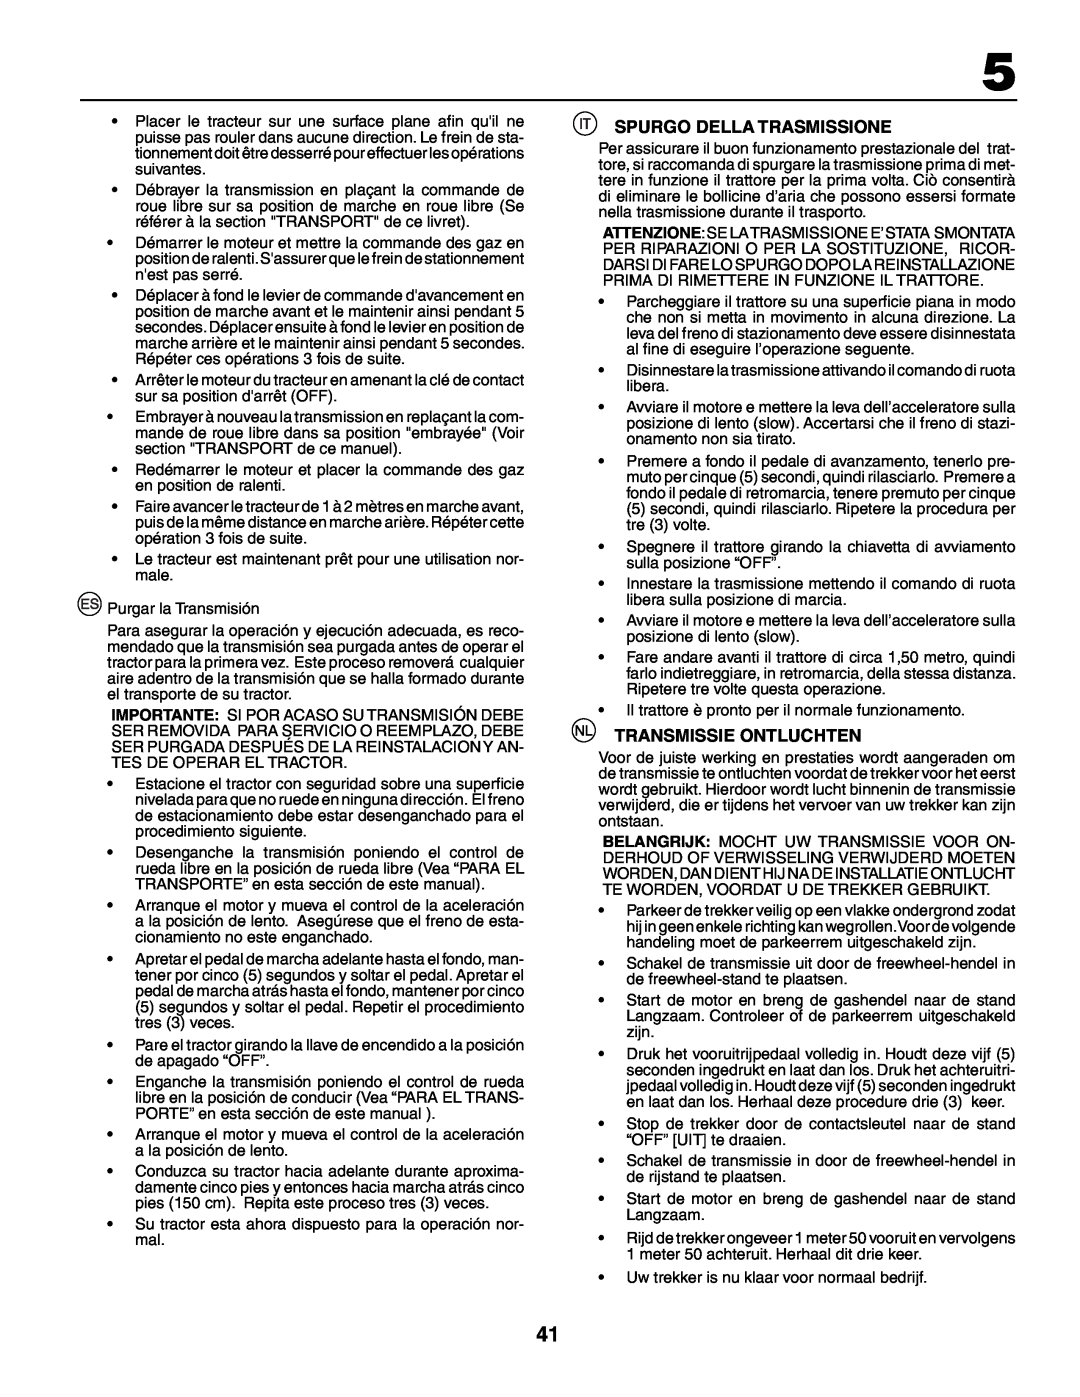 Husqvarna YTH210XP instruction manual Spurgo Della Trasmissione, Transmissie Ontluchten 